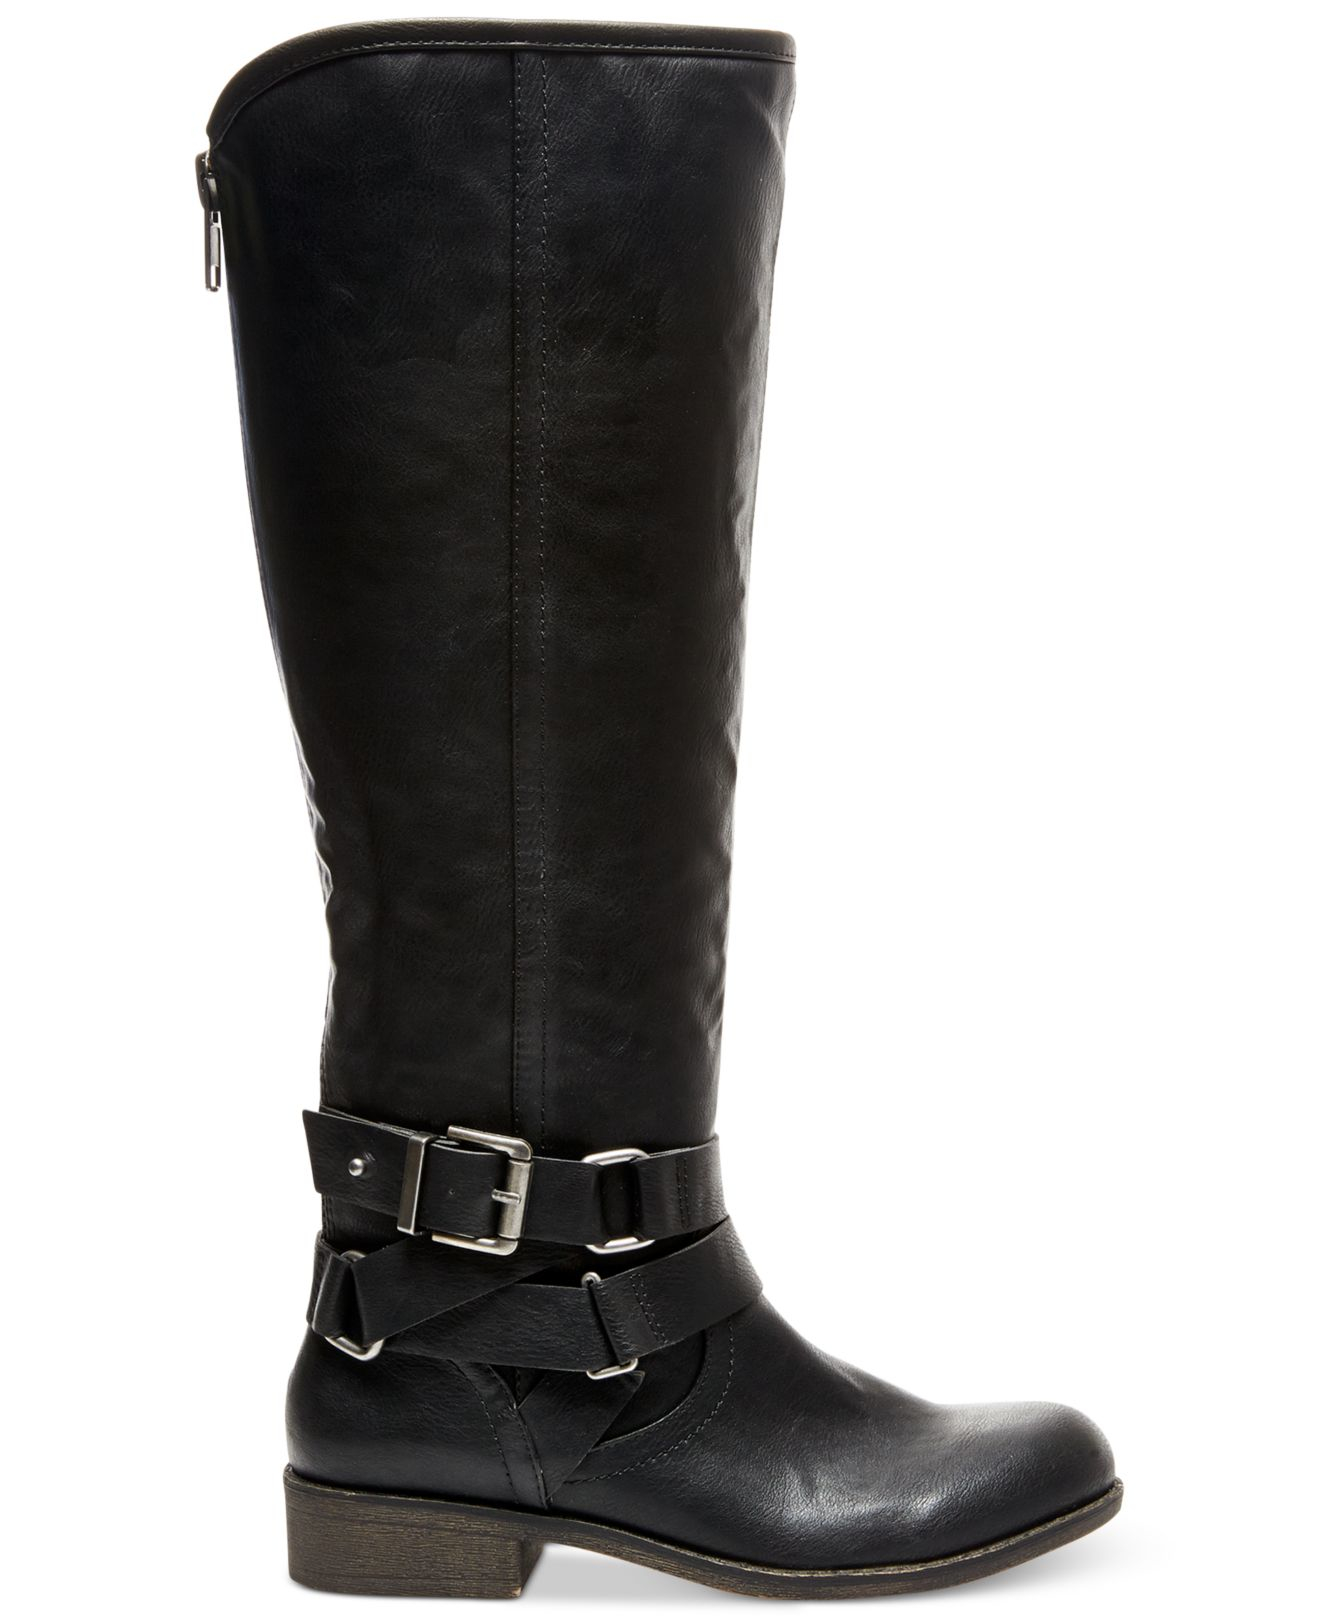 Madden girl Corporel Boots in Black